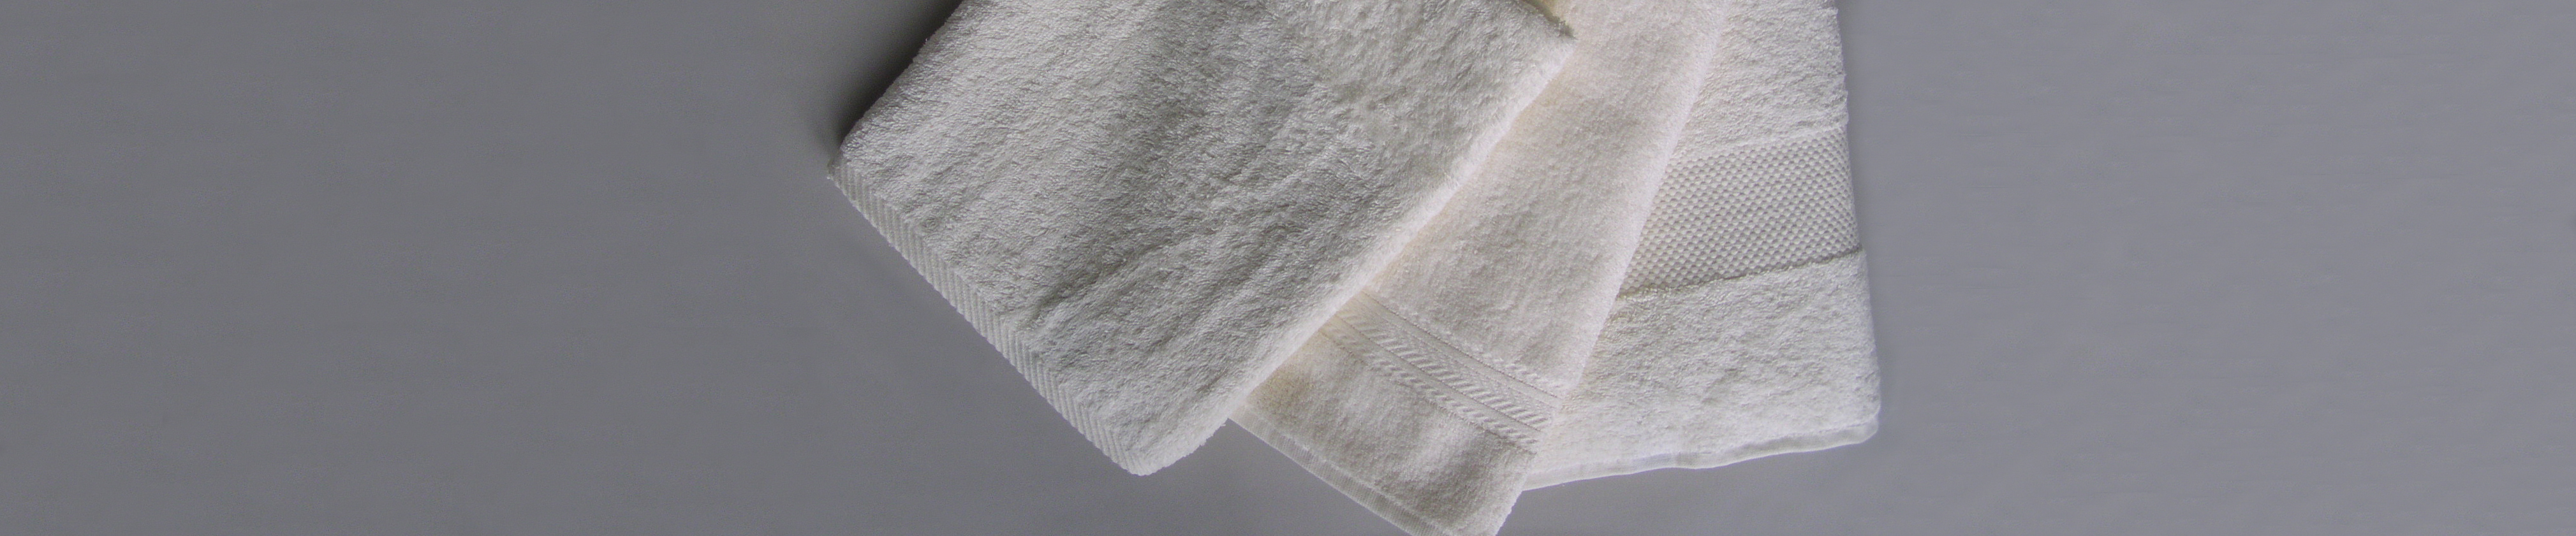 Håndklædeborter-Uniquemade